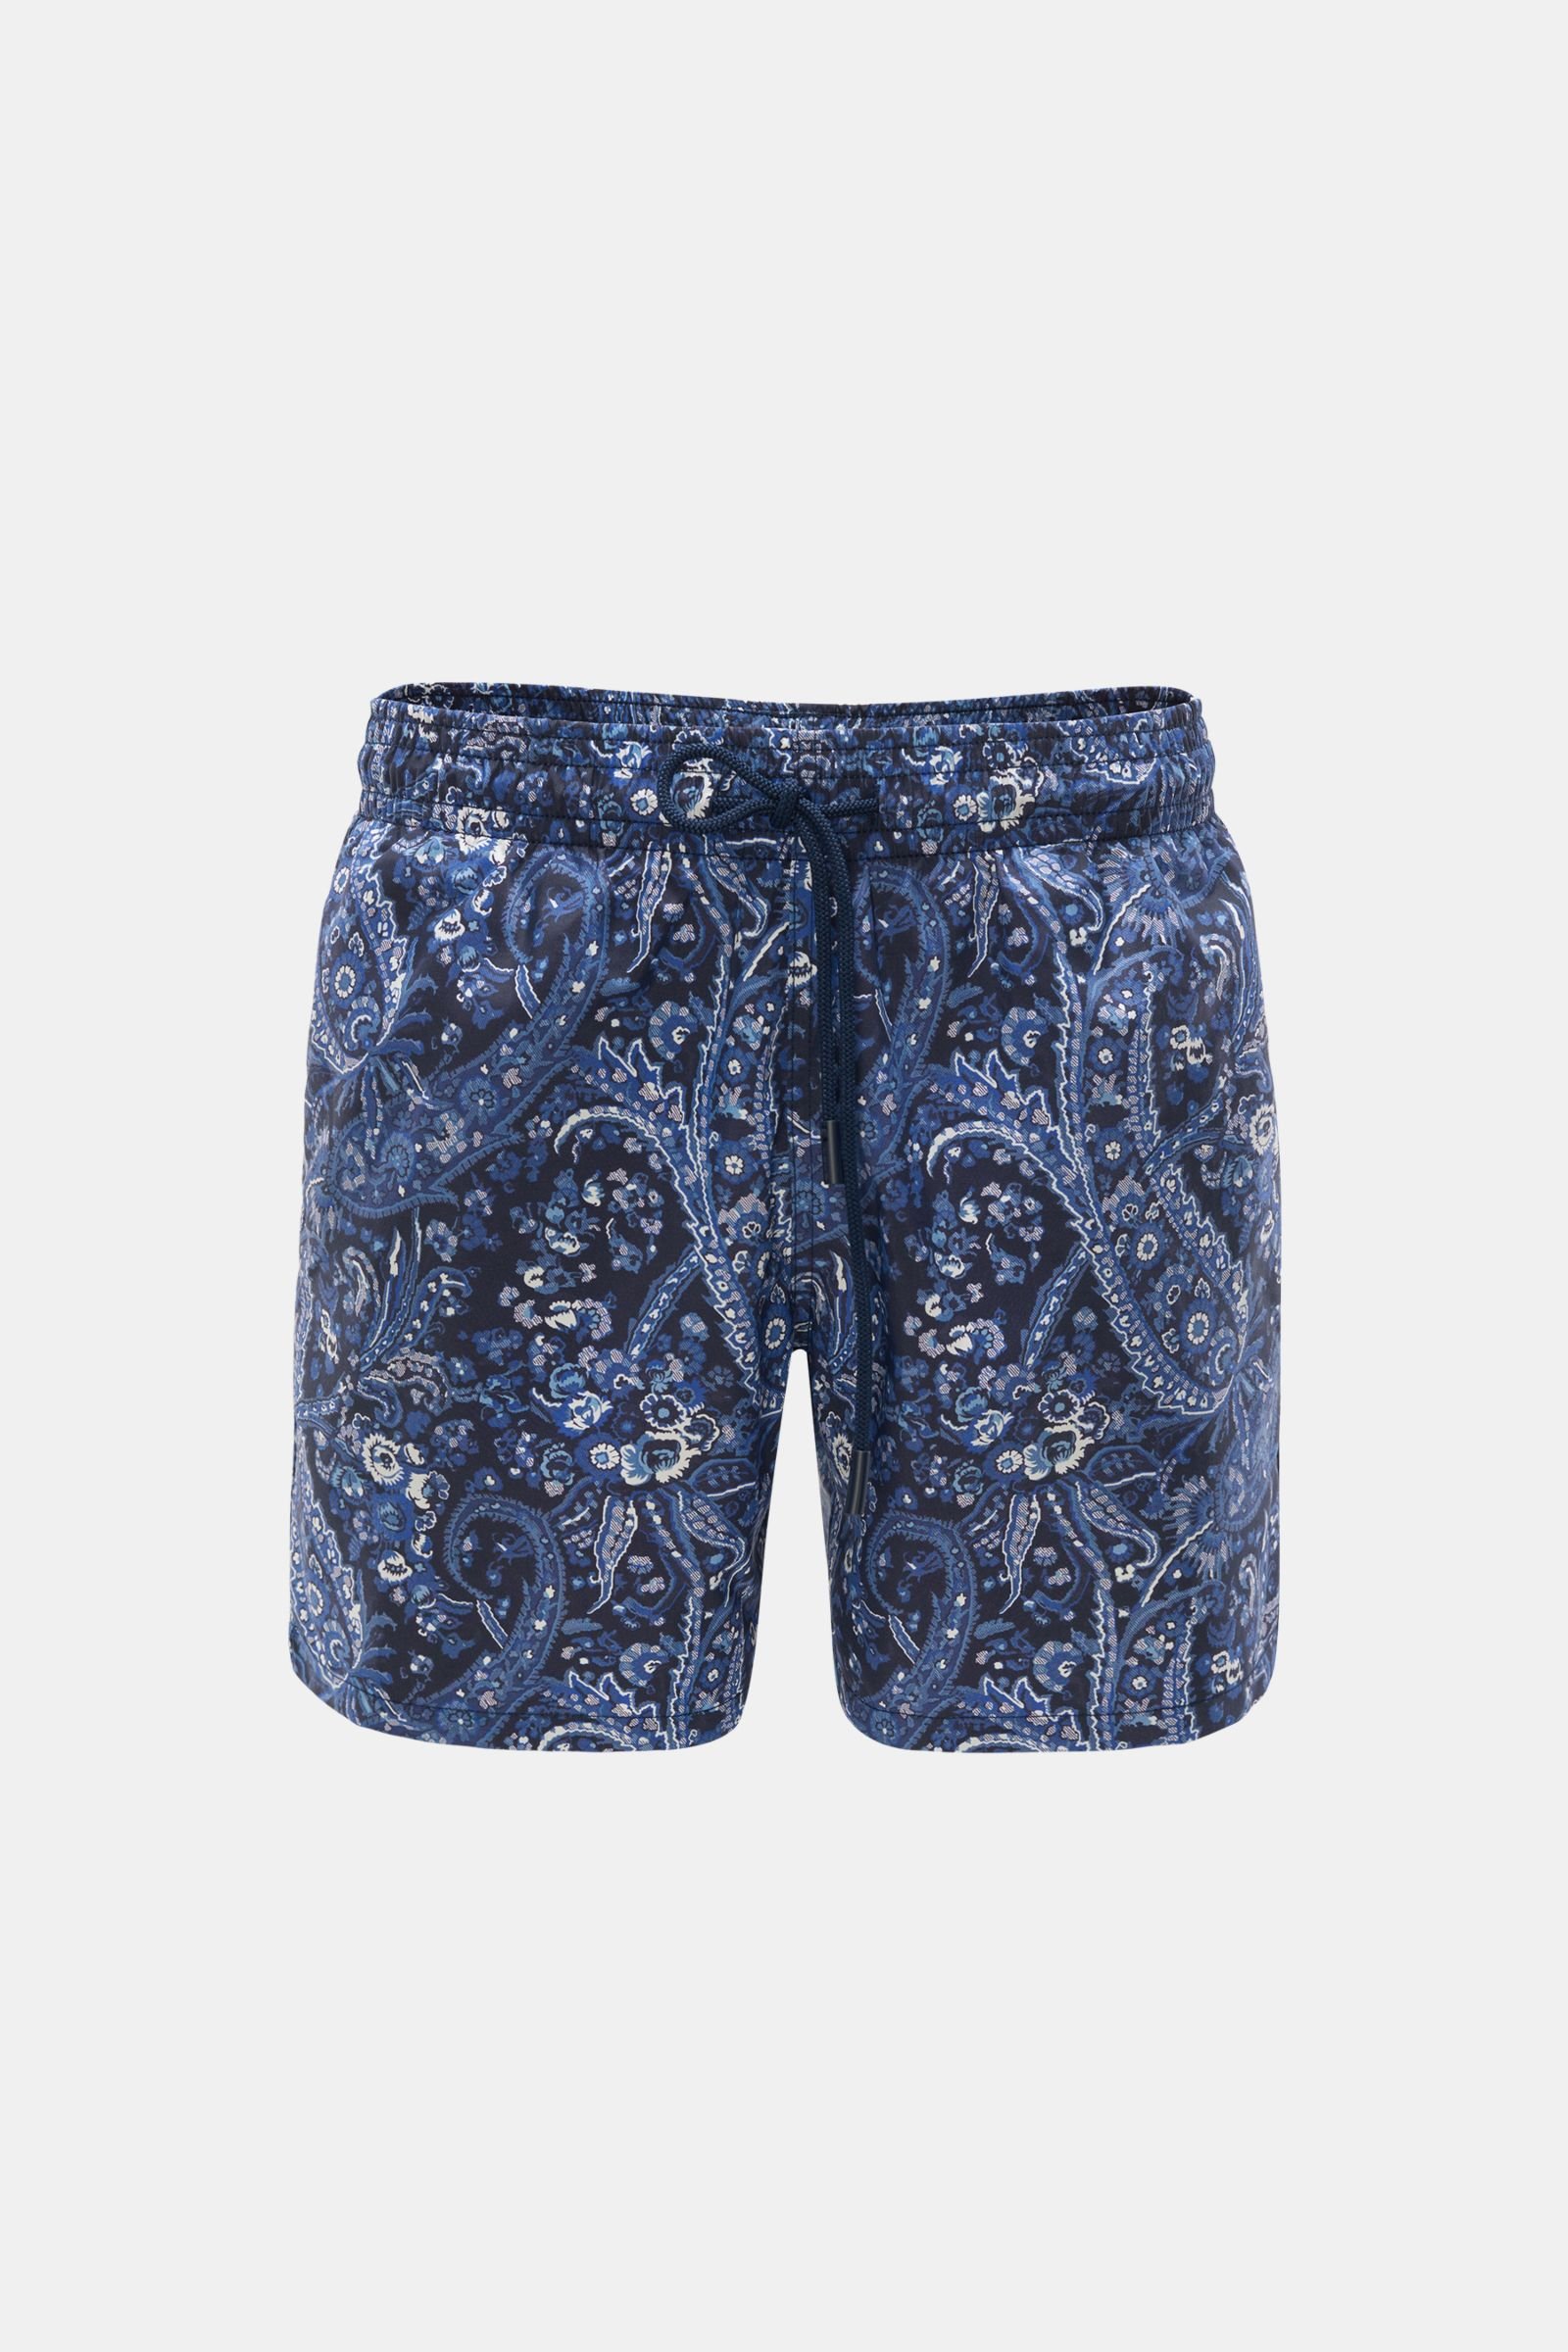 Swim shorts navy patterned